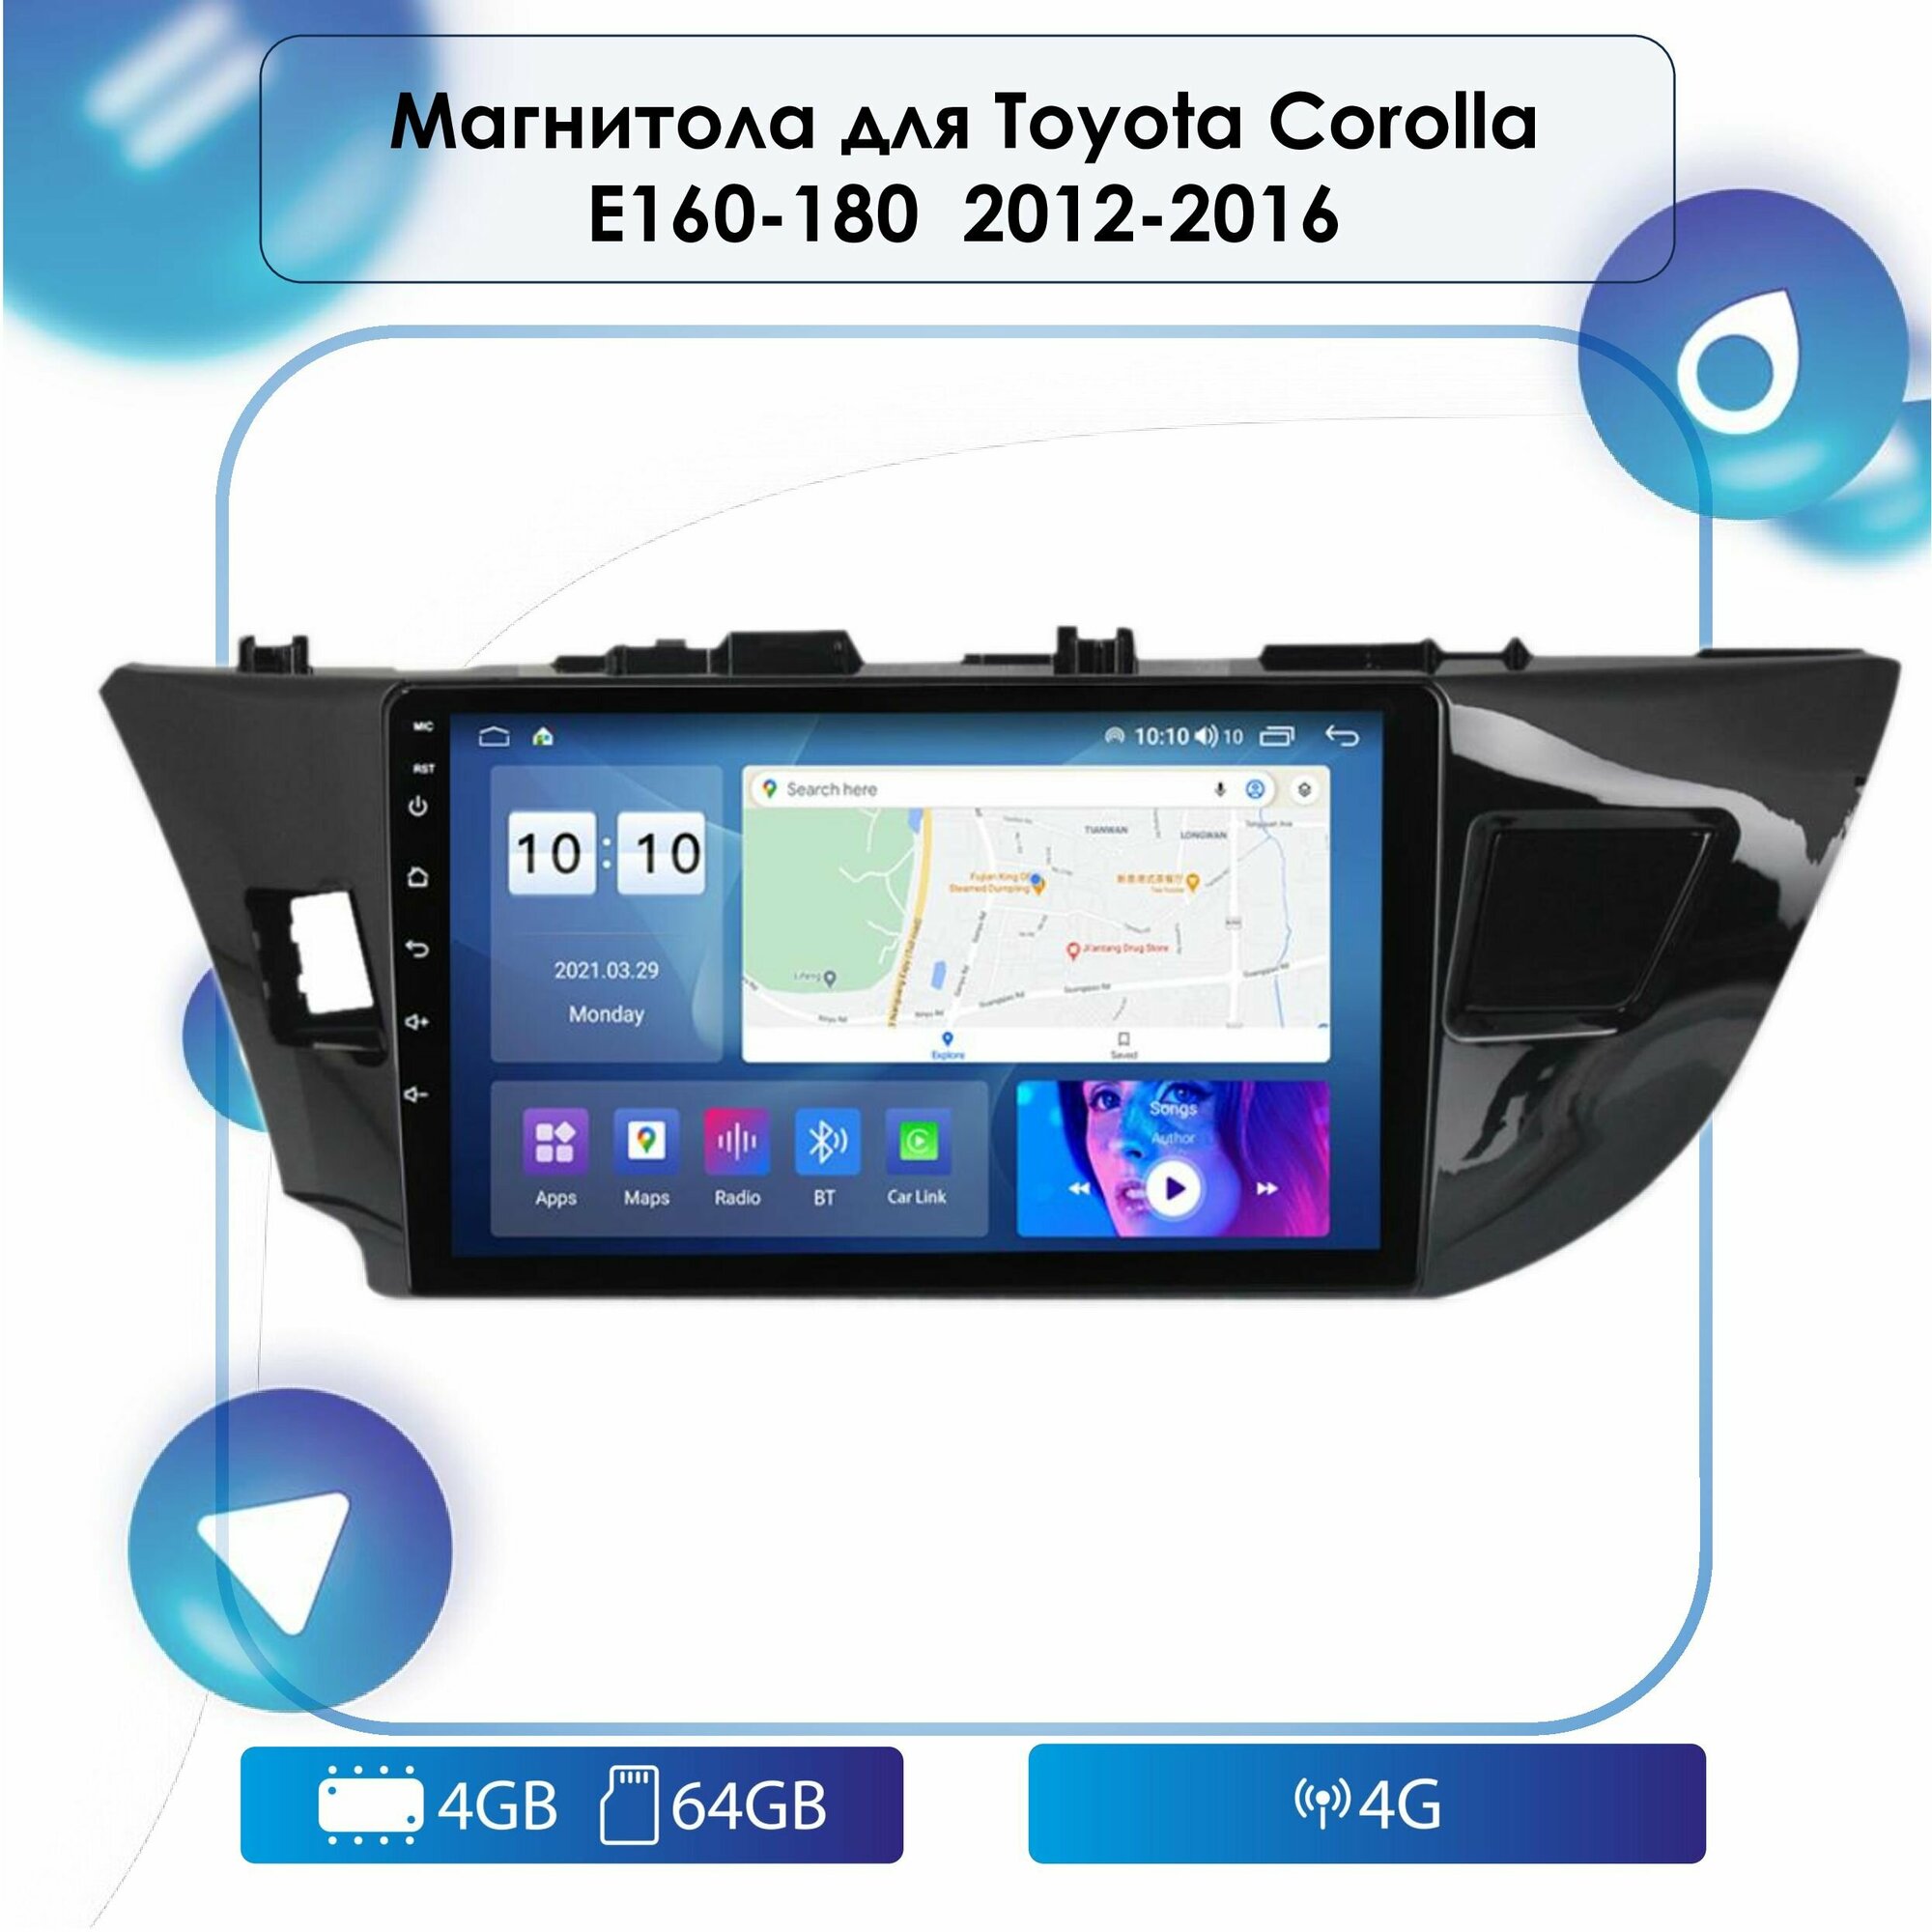 Автомагнитола для Toyota Corolla E160-180 2012-2016 Android, 4-64 4G, Bluetooth, Wi-Fi, GPS, Эквалайзер, Мульти-Руль